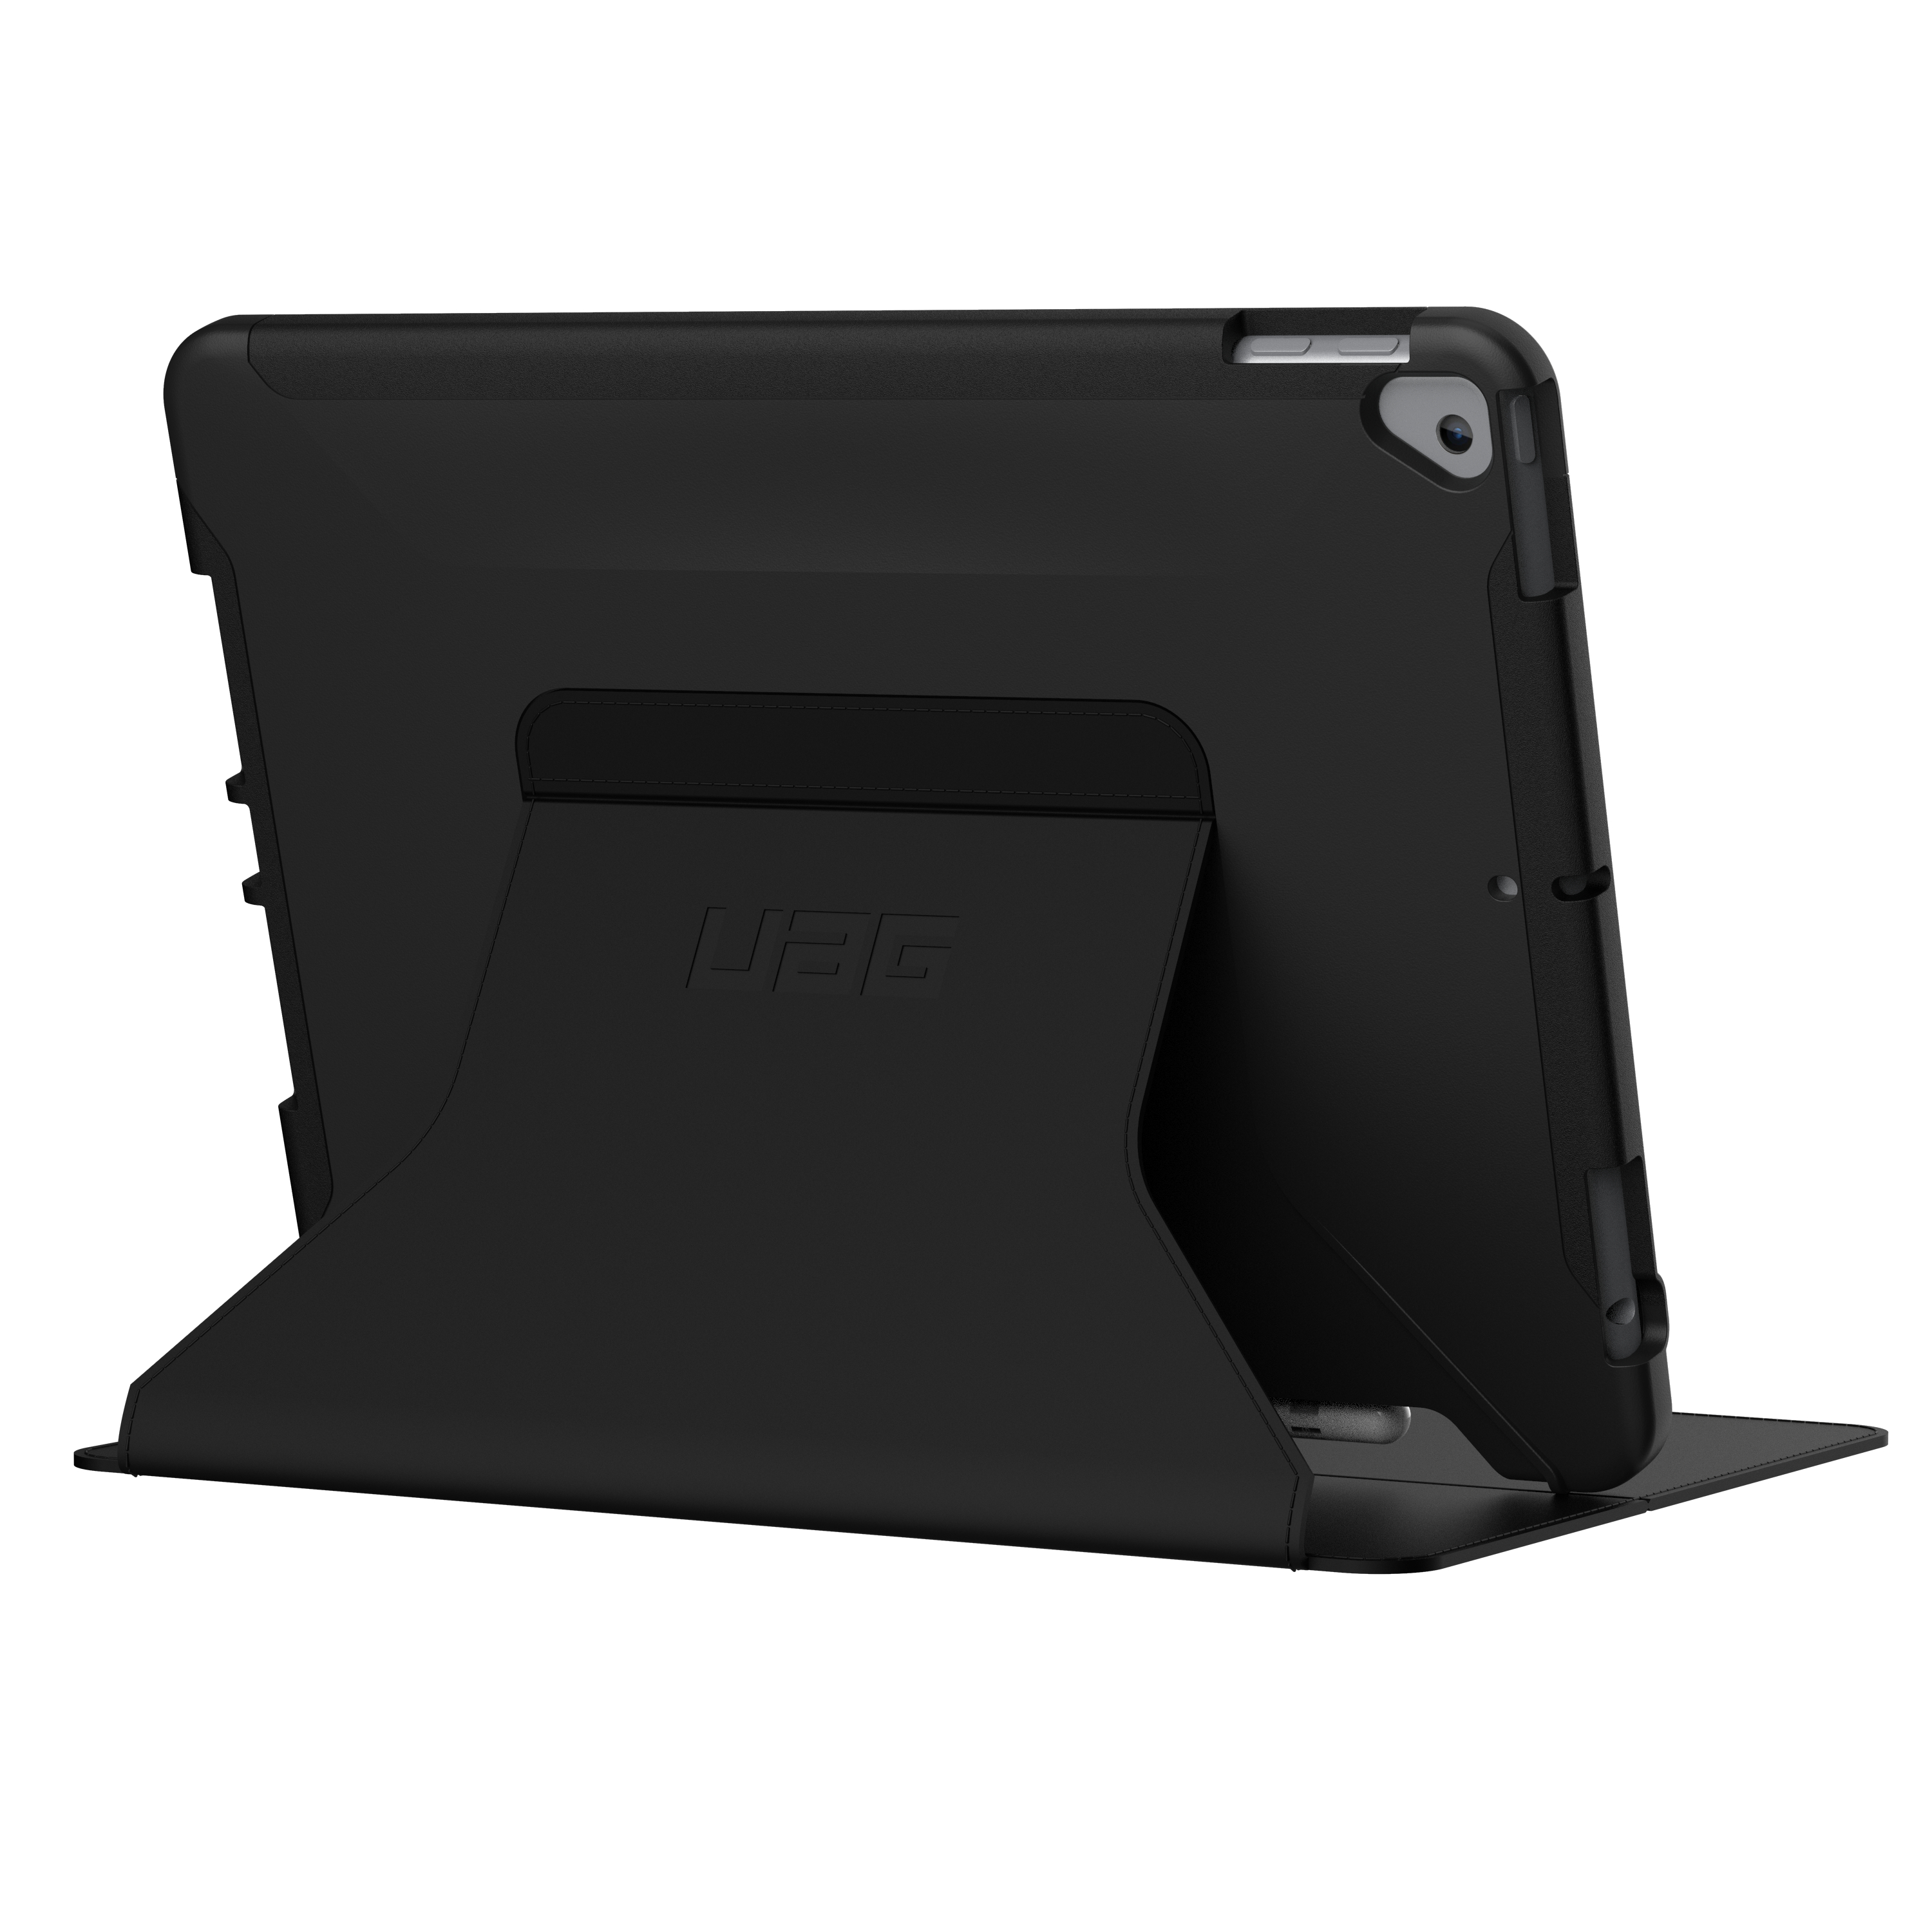 Ốp UAG Scout sử dụng chung với bao da Folio cho iPad 10.2